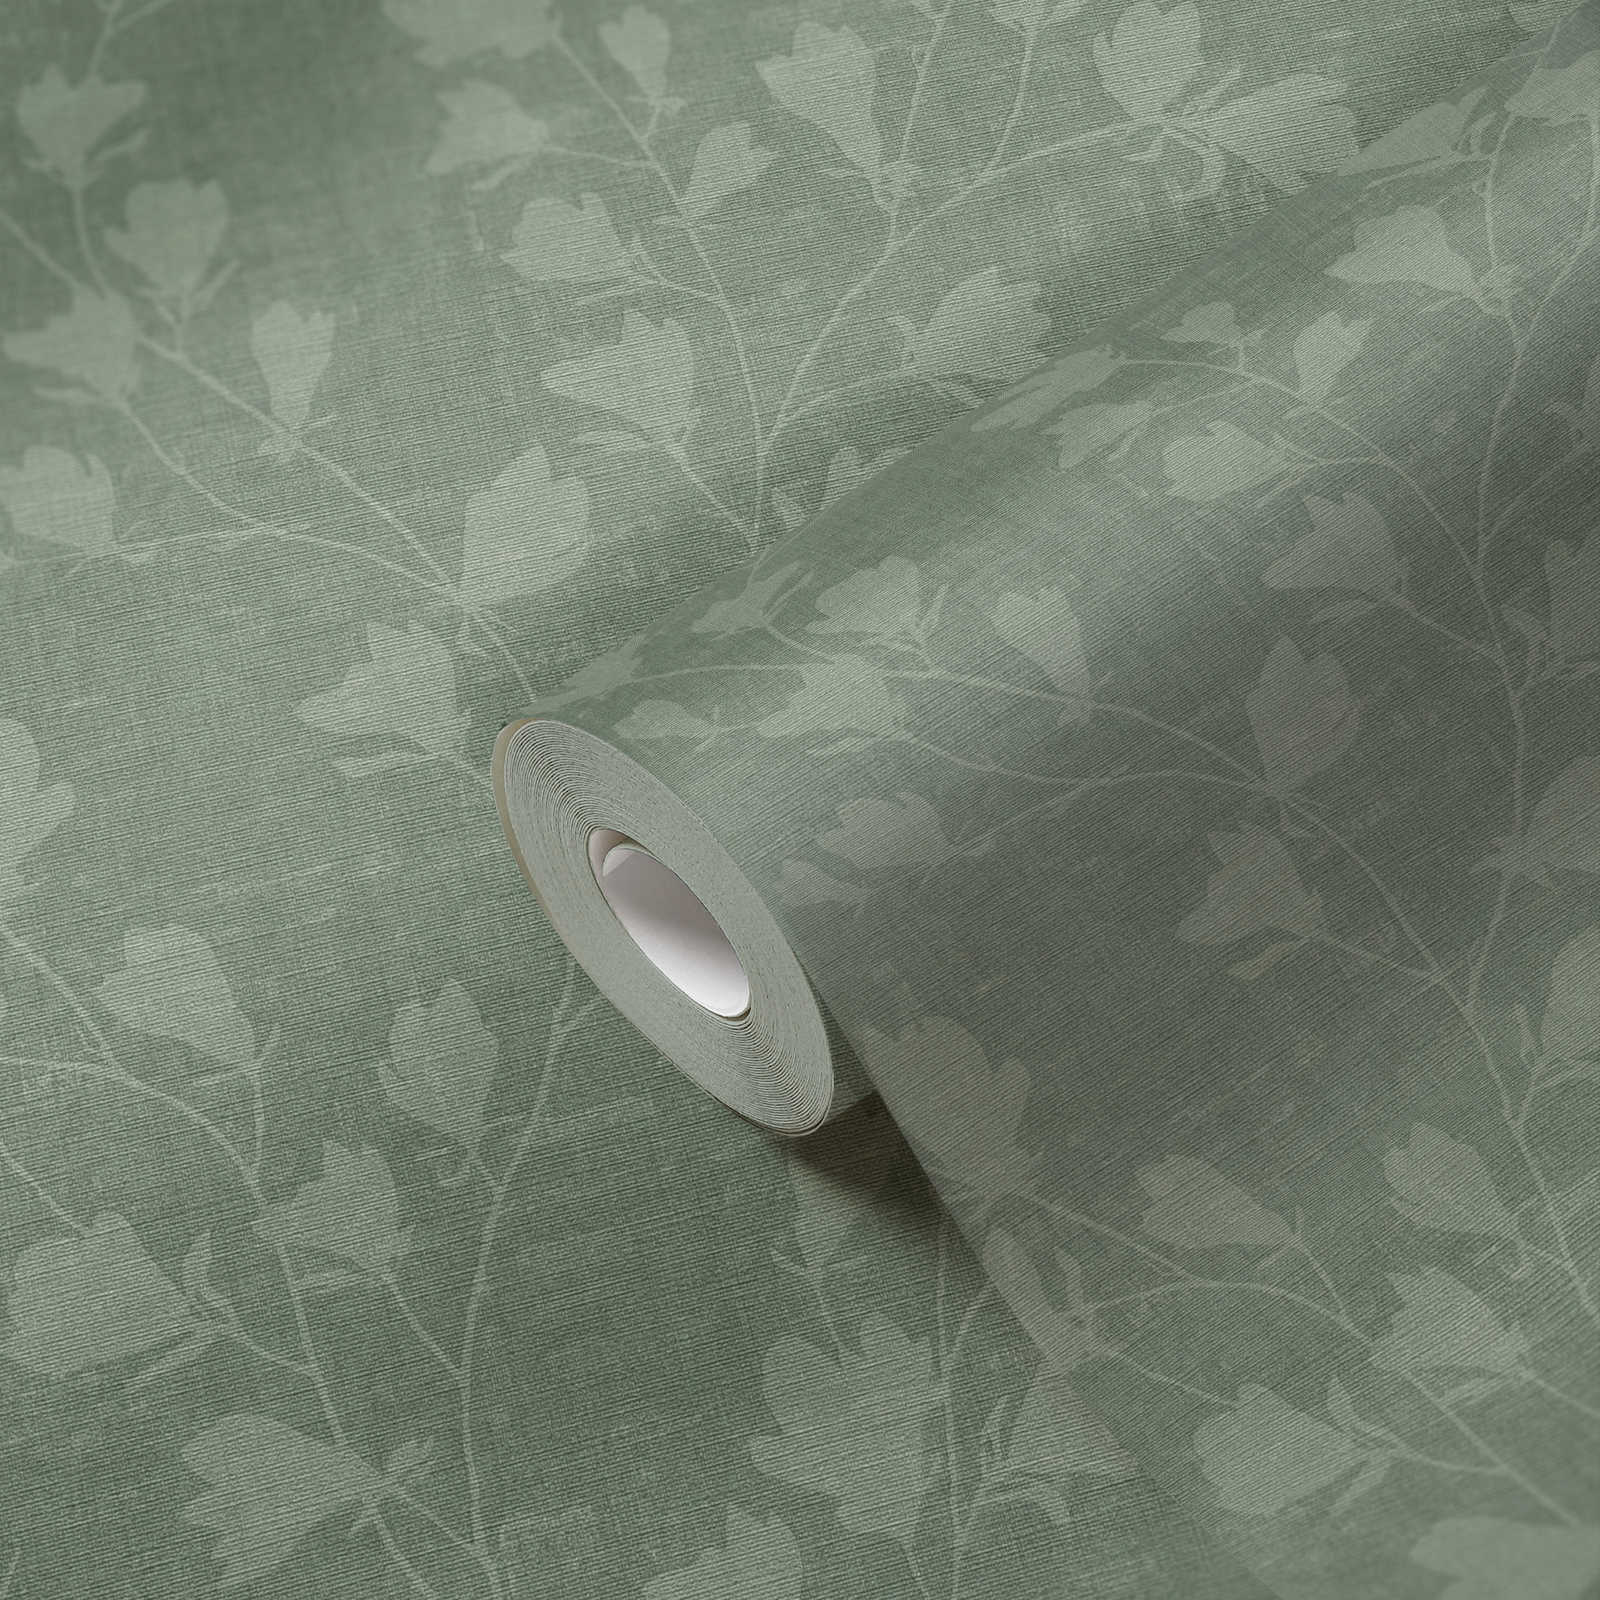             Papier peint naturel avec motif de feuilles - vert
        